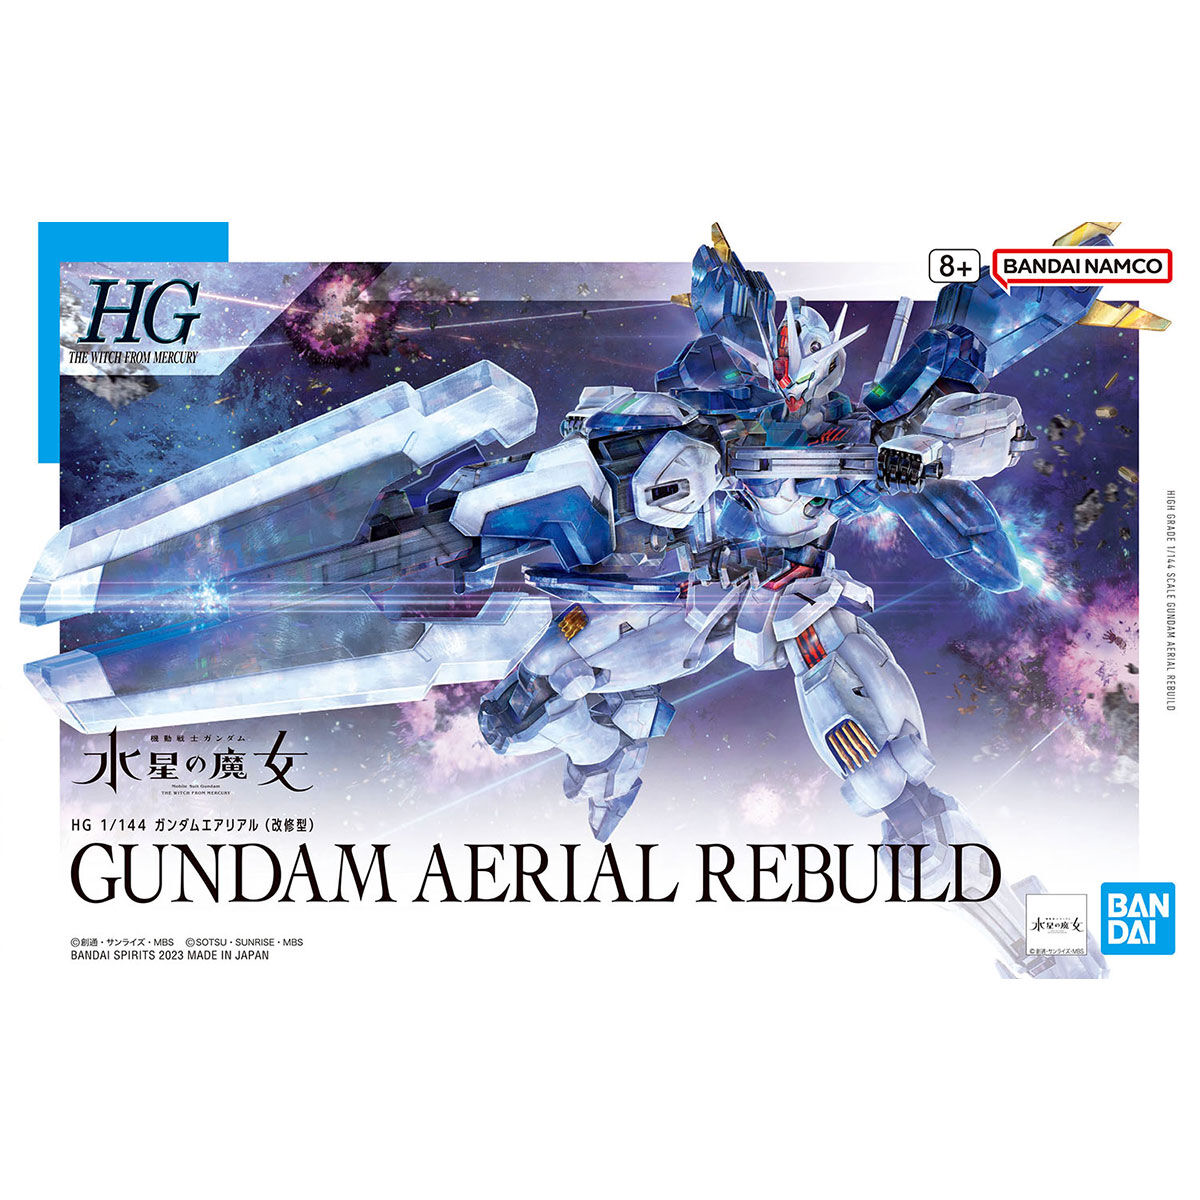 HG 1/144 Gundam Aerial Rebuild (July & August Ship Date)